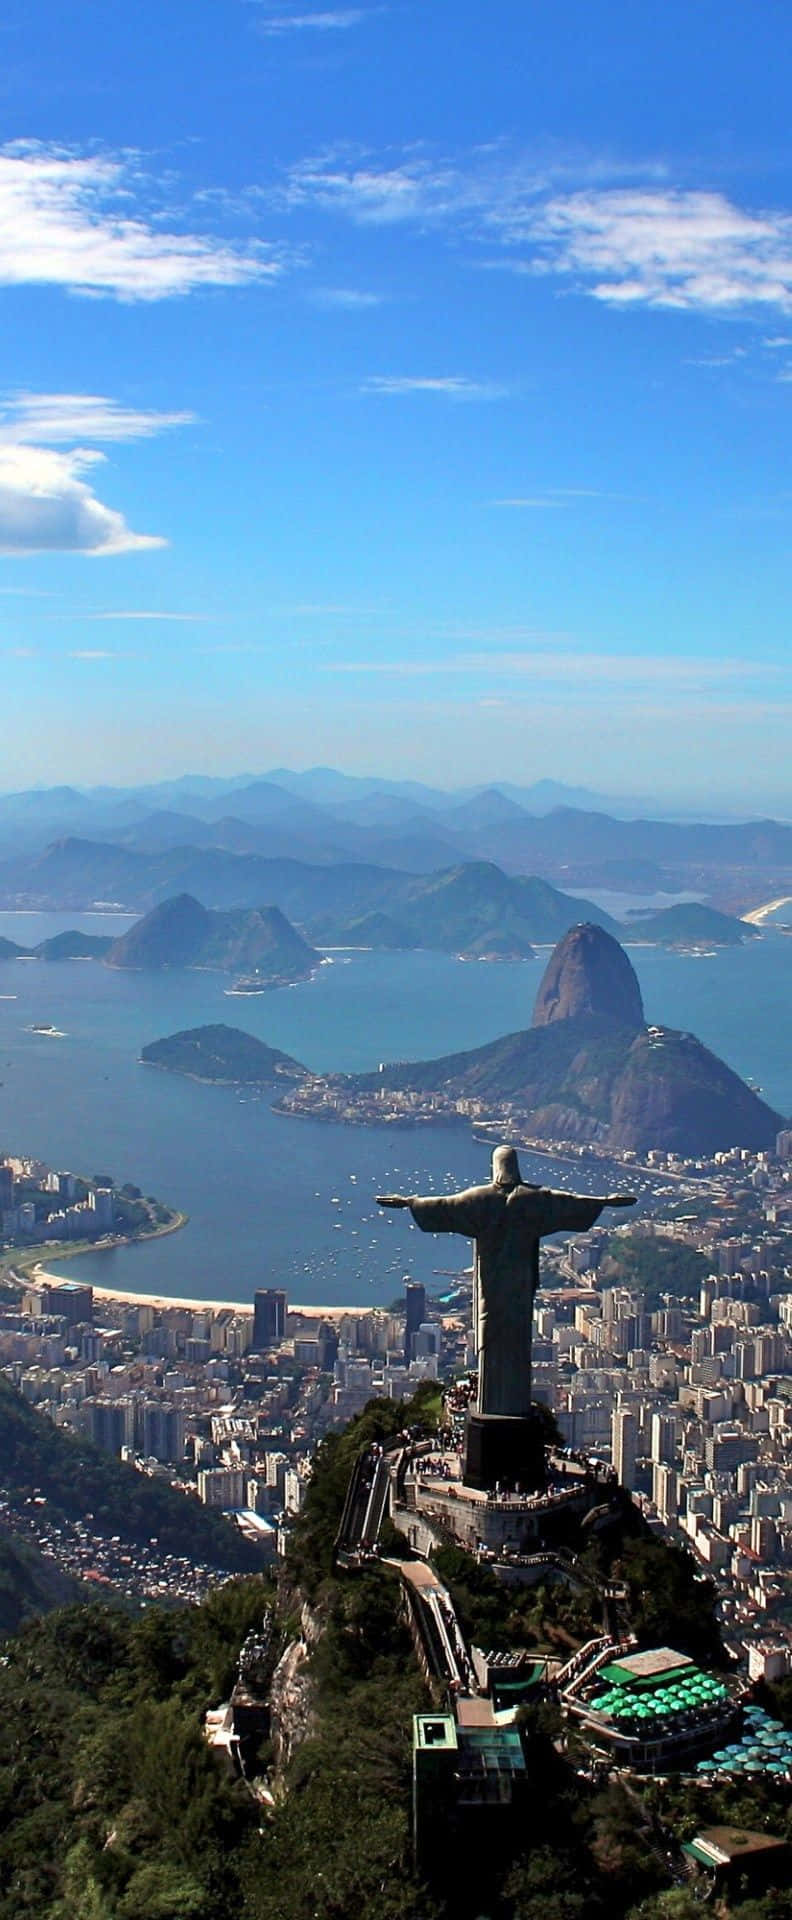 Breathtaking View Of Sugarloaf Mountain In Rio De Janeiro, Brazil